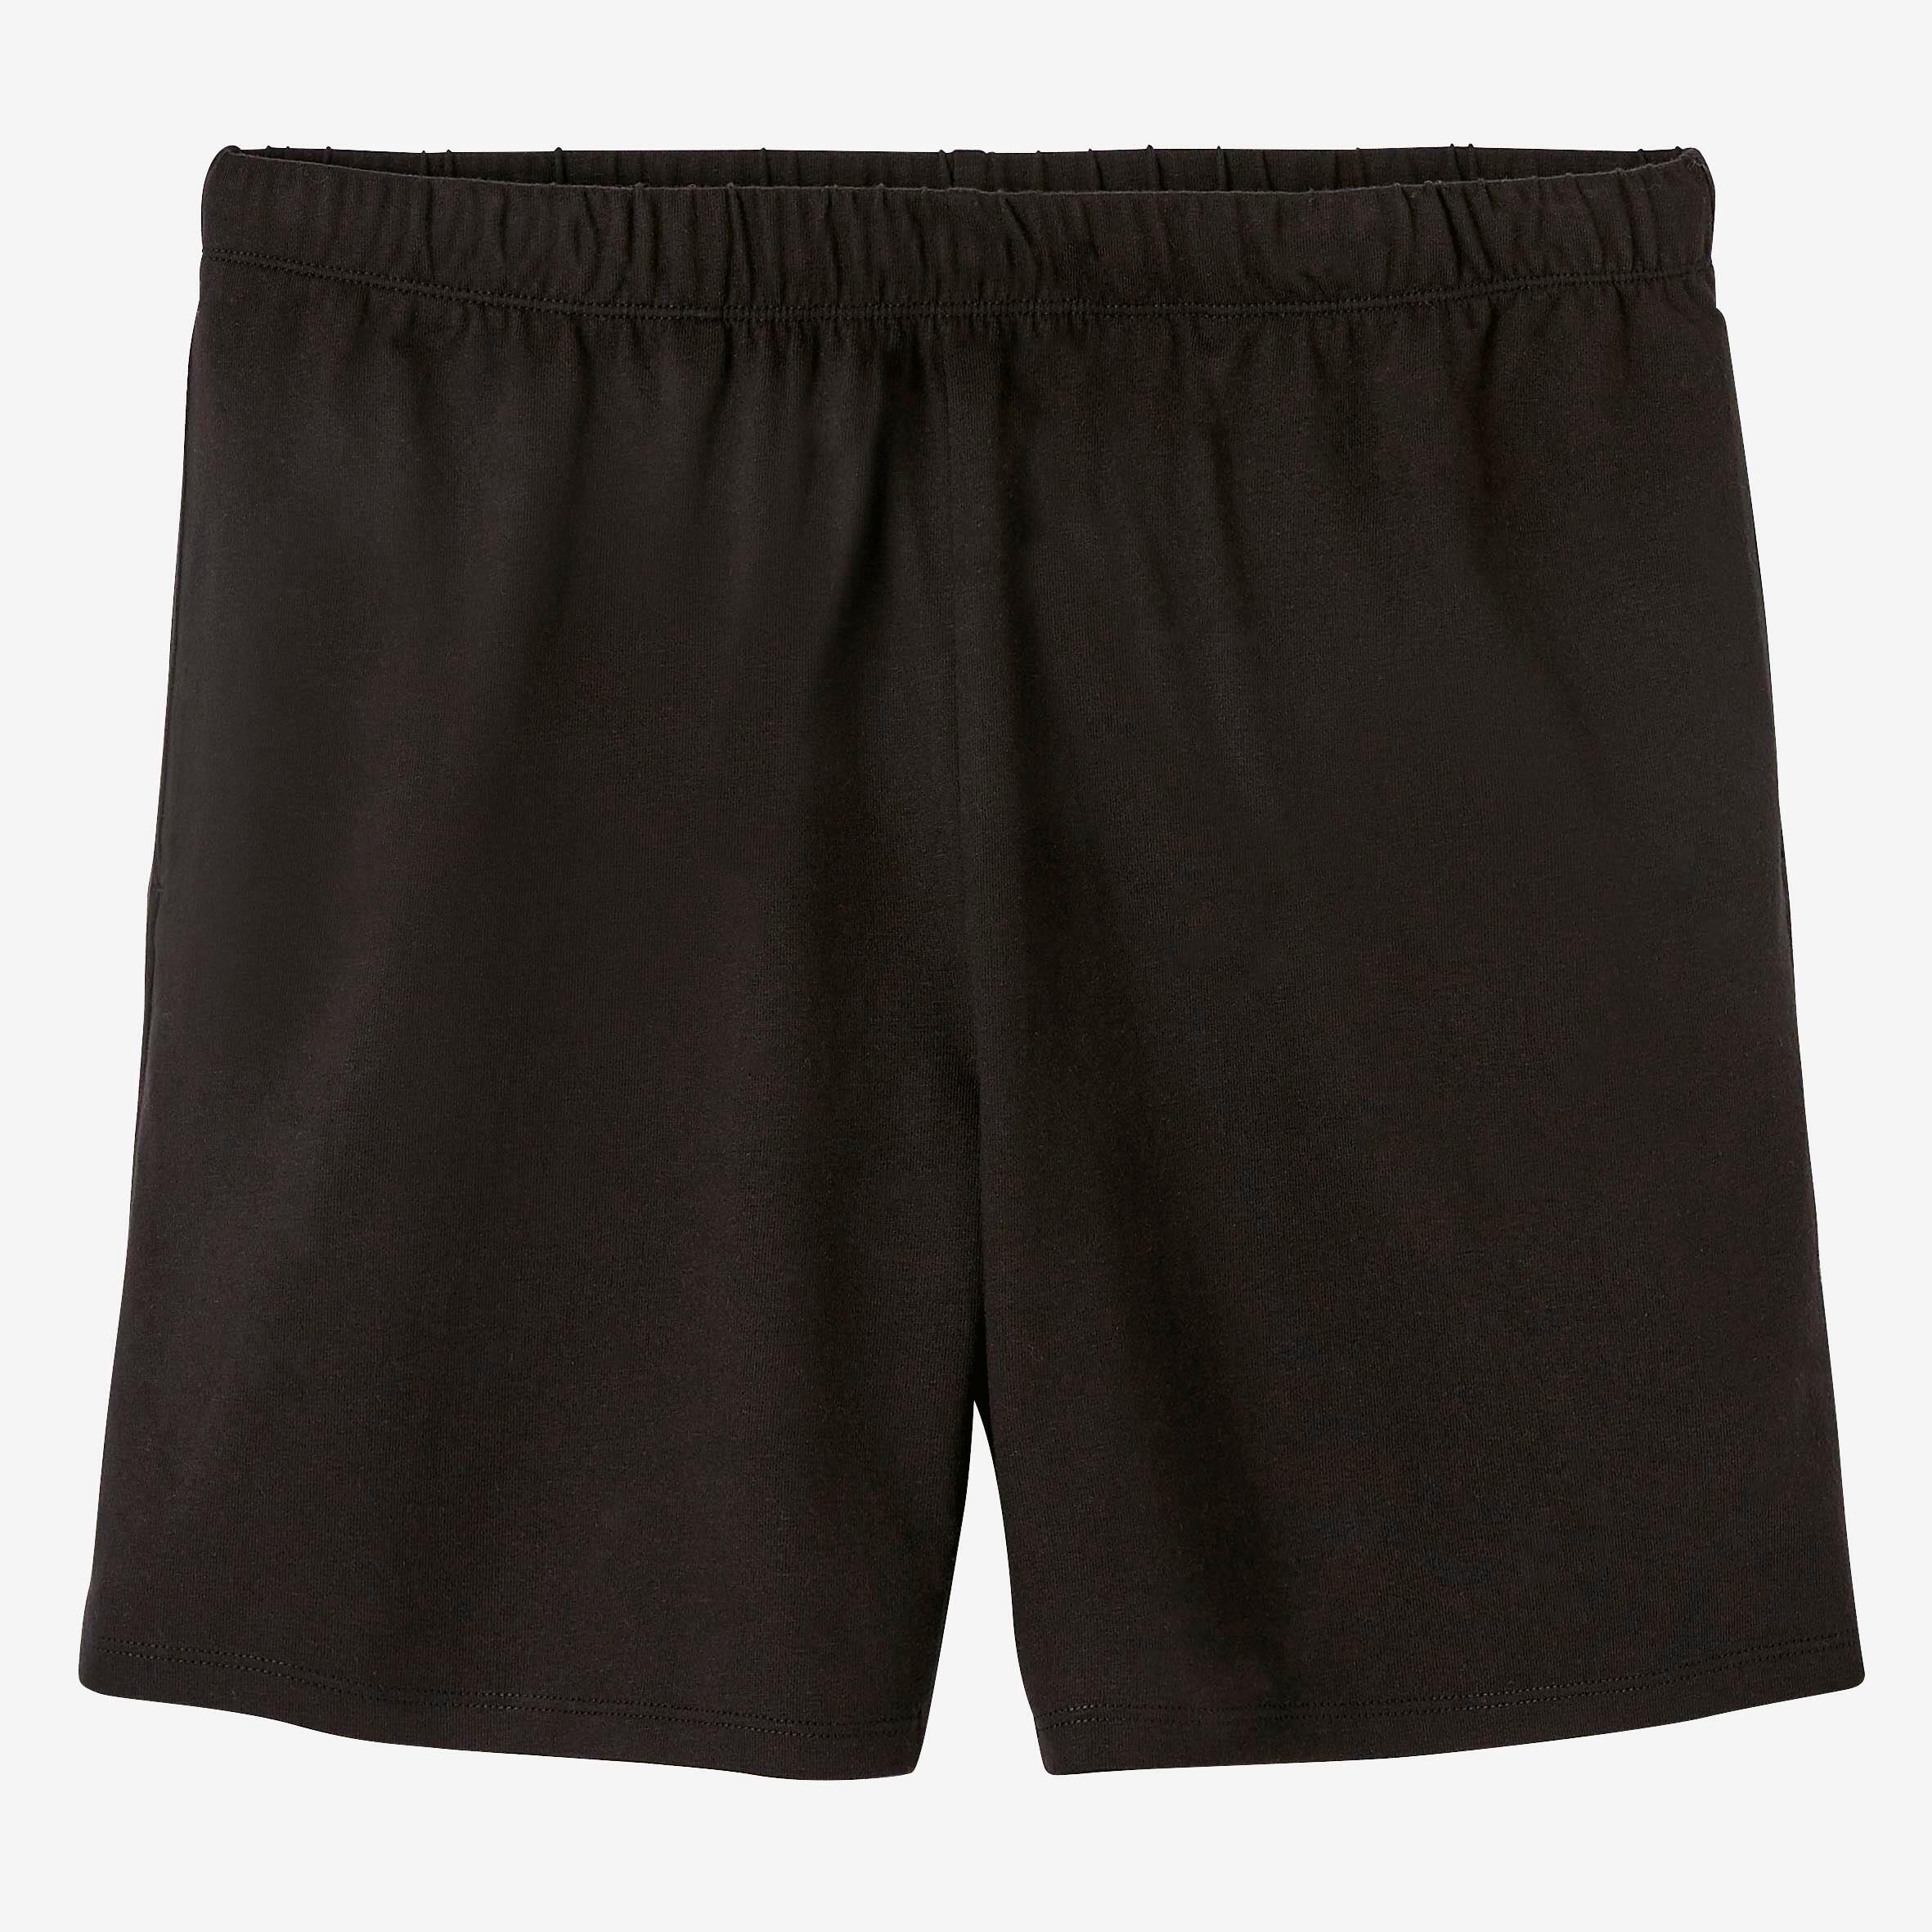 Men's Fitness Short Shorts 100 - Black 5/5